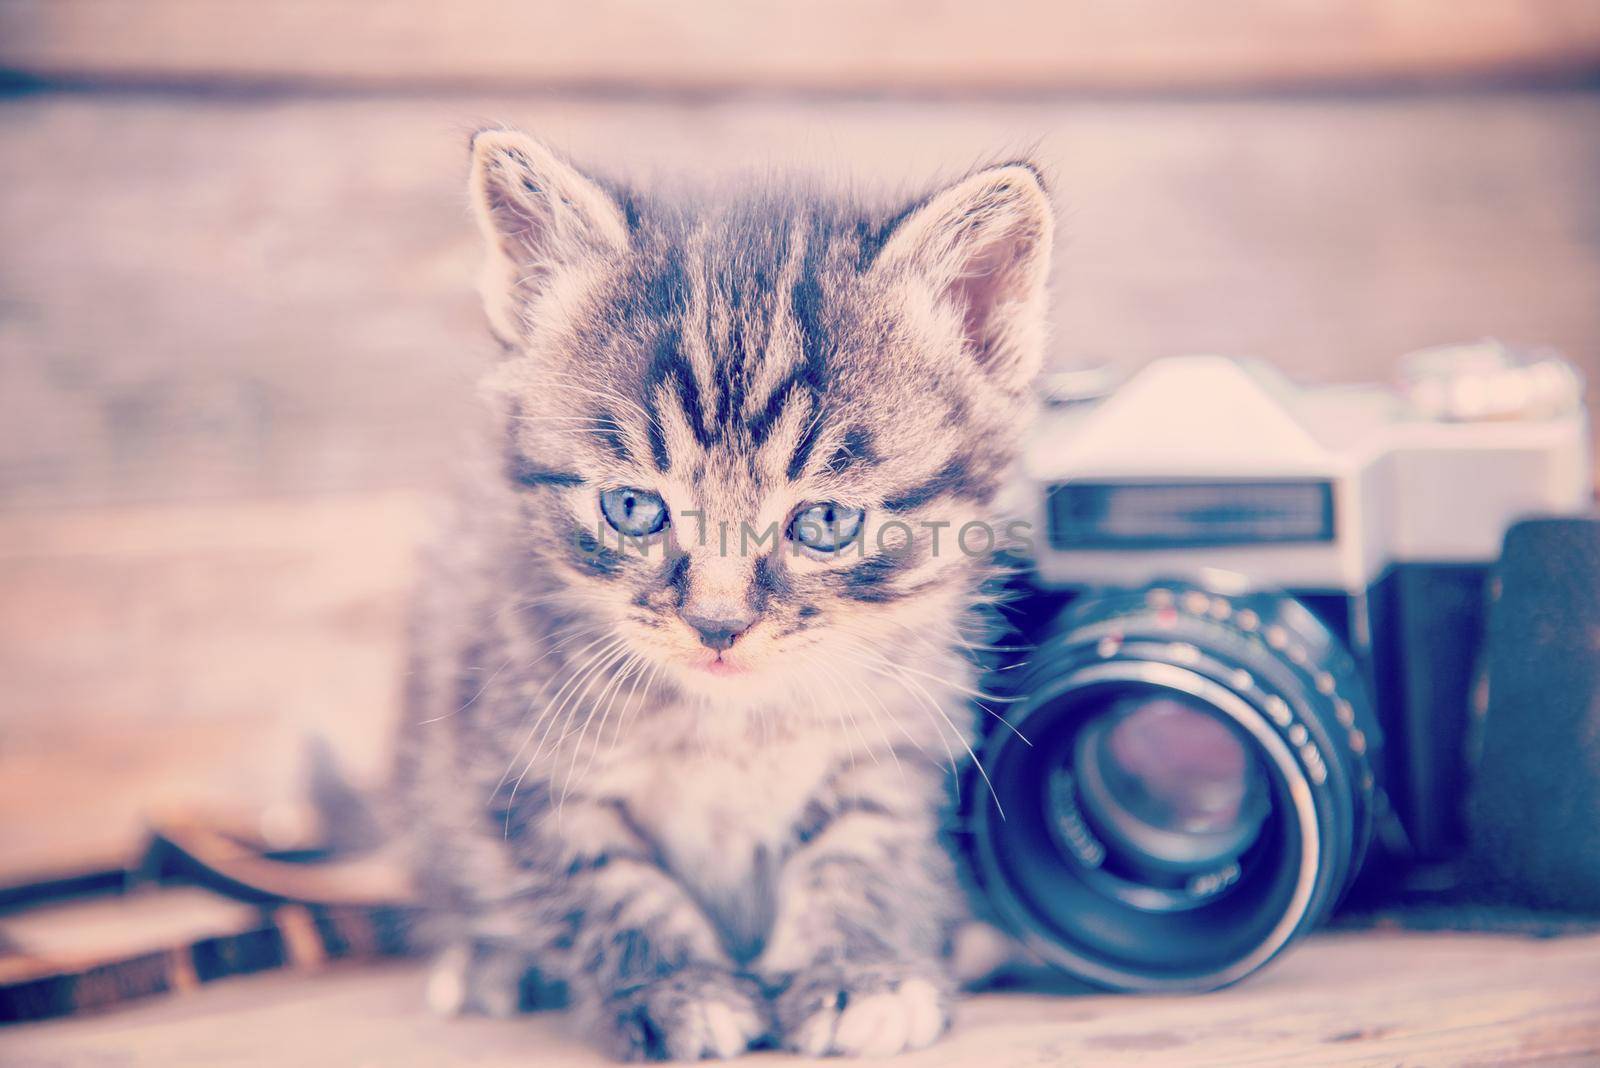 Little kitten sits near vintage photo camera on a wooden table